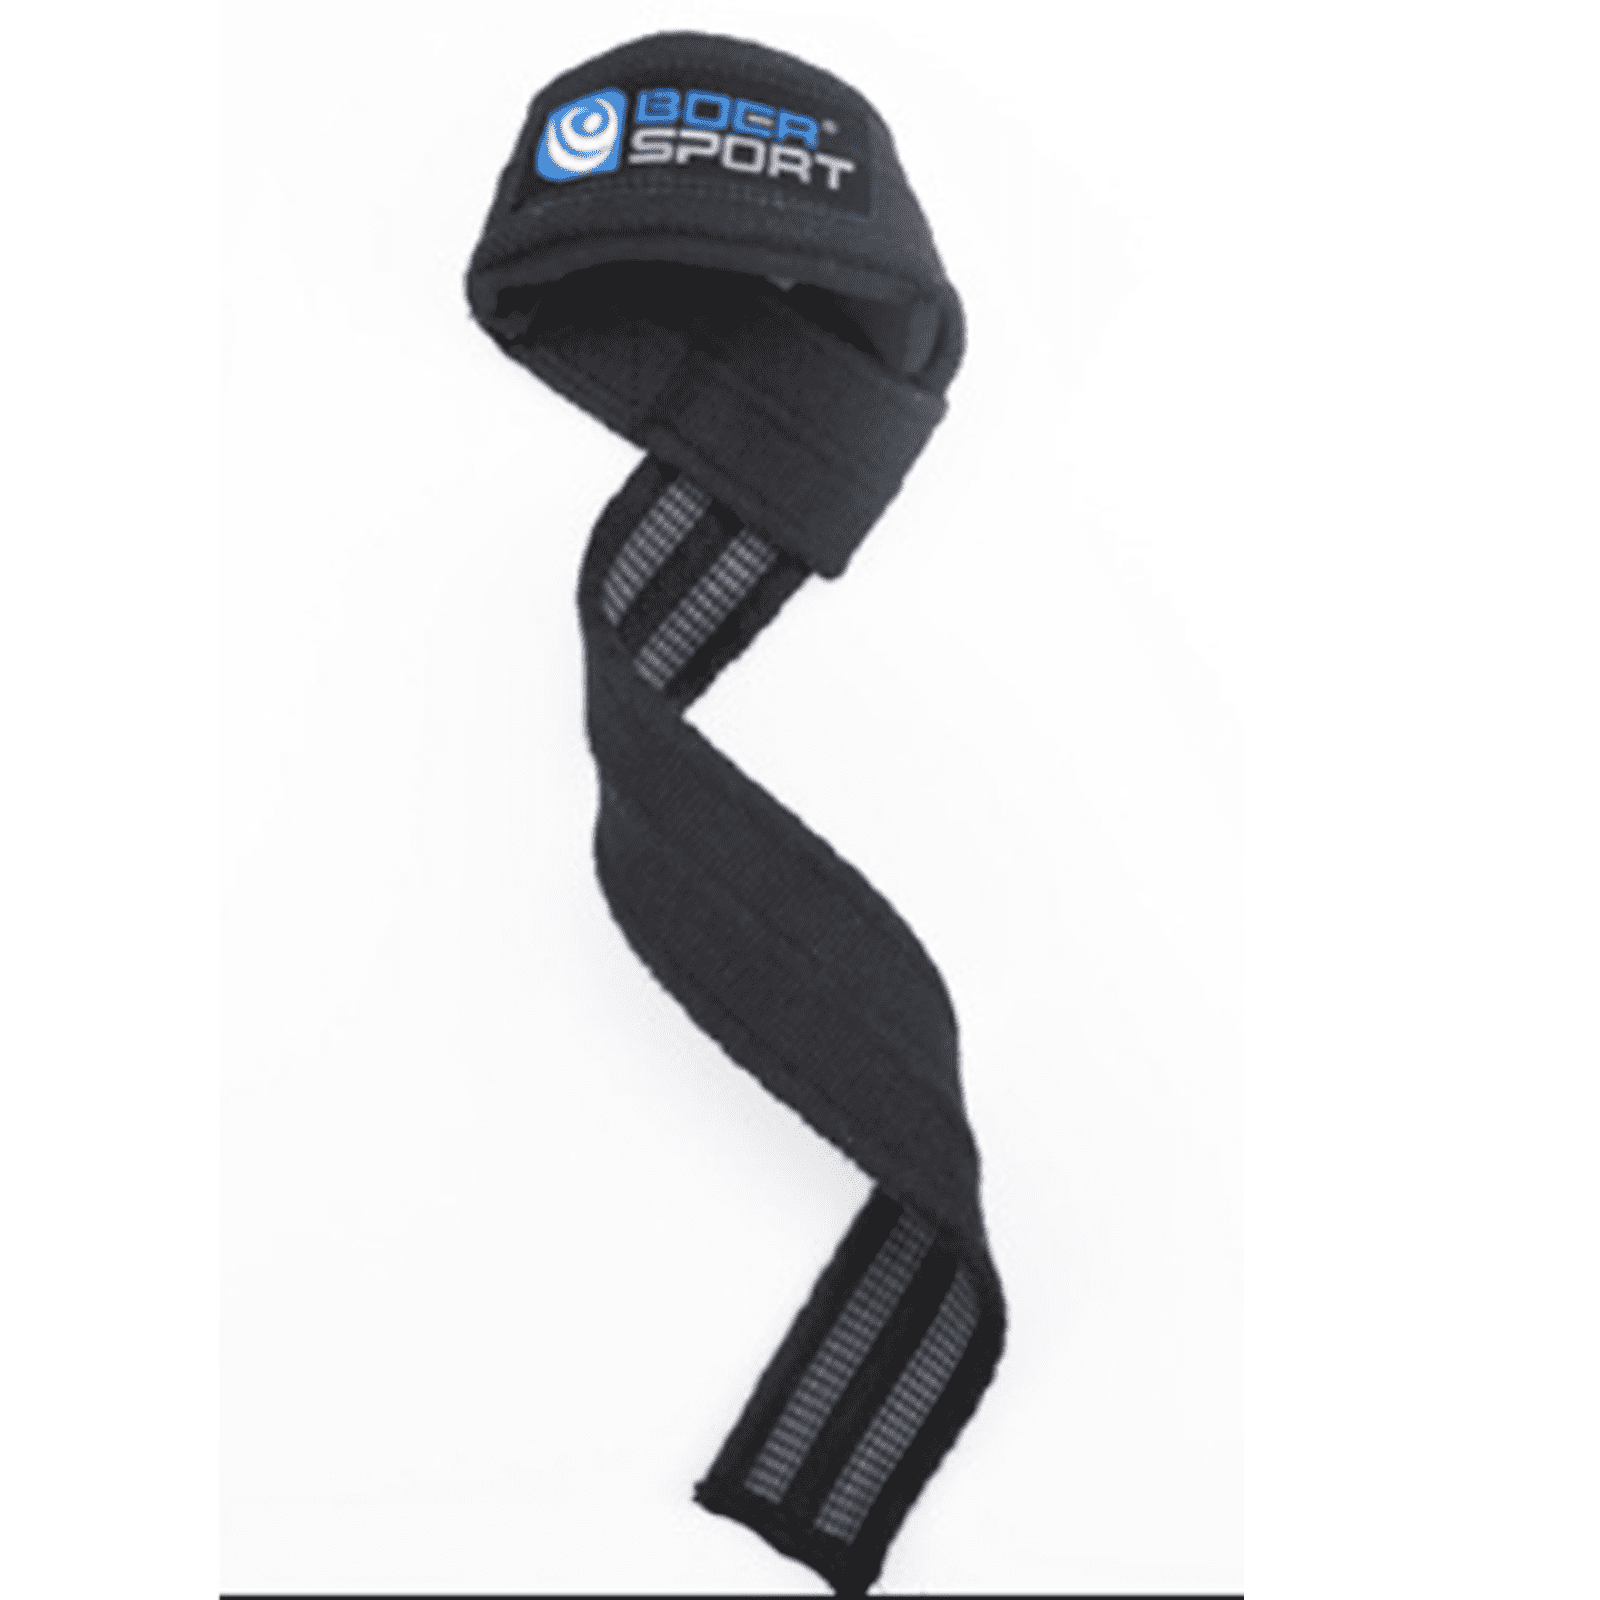 RGX Grip Anti-Slip Nylon Lifting Straps with Dura Grip 5mm Neoprene Padded Support RGX Fitness Gear 